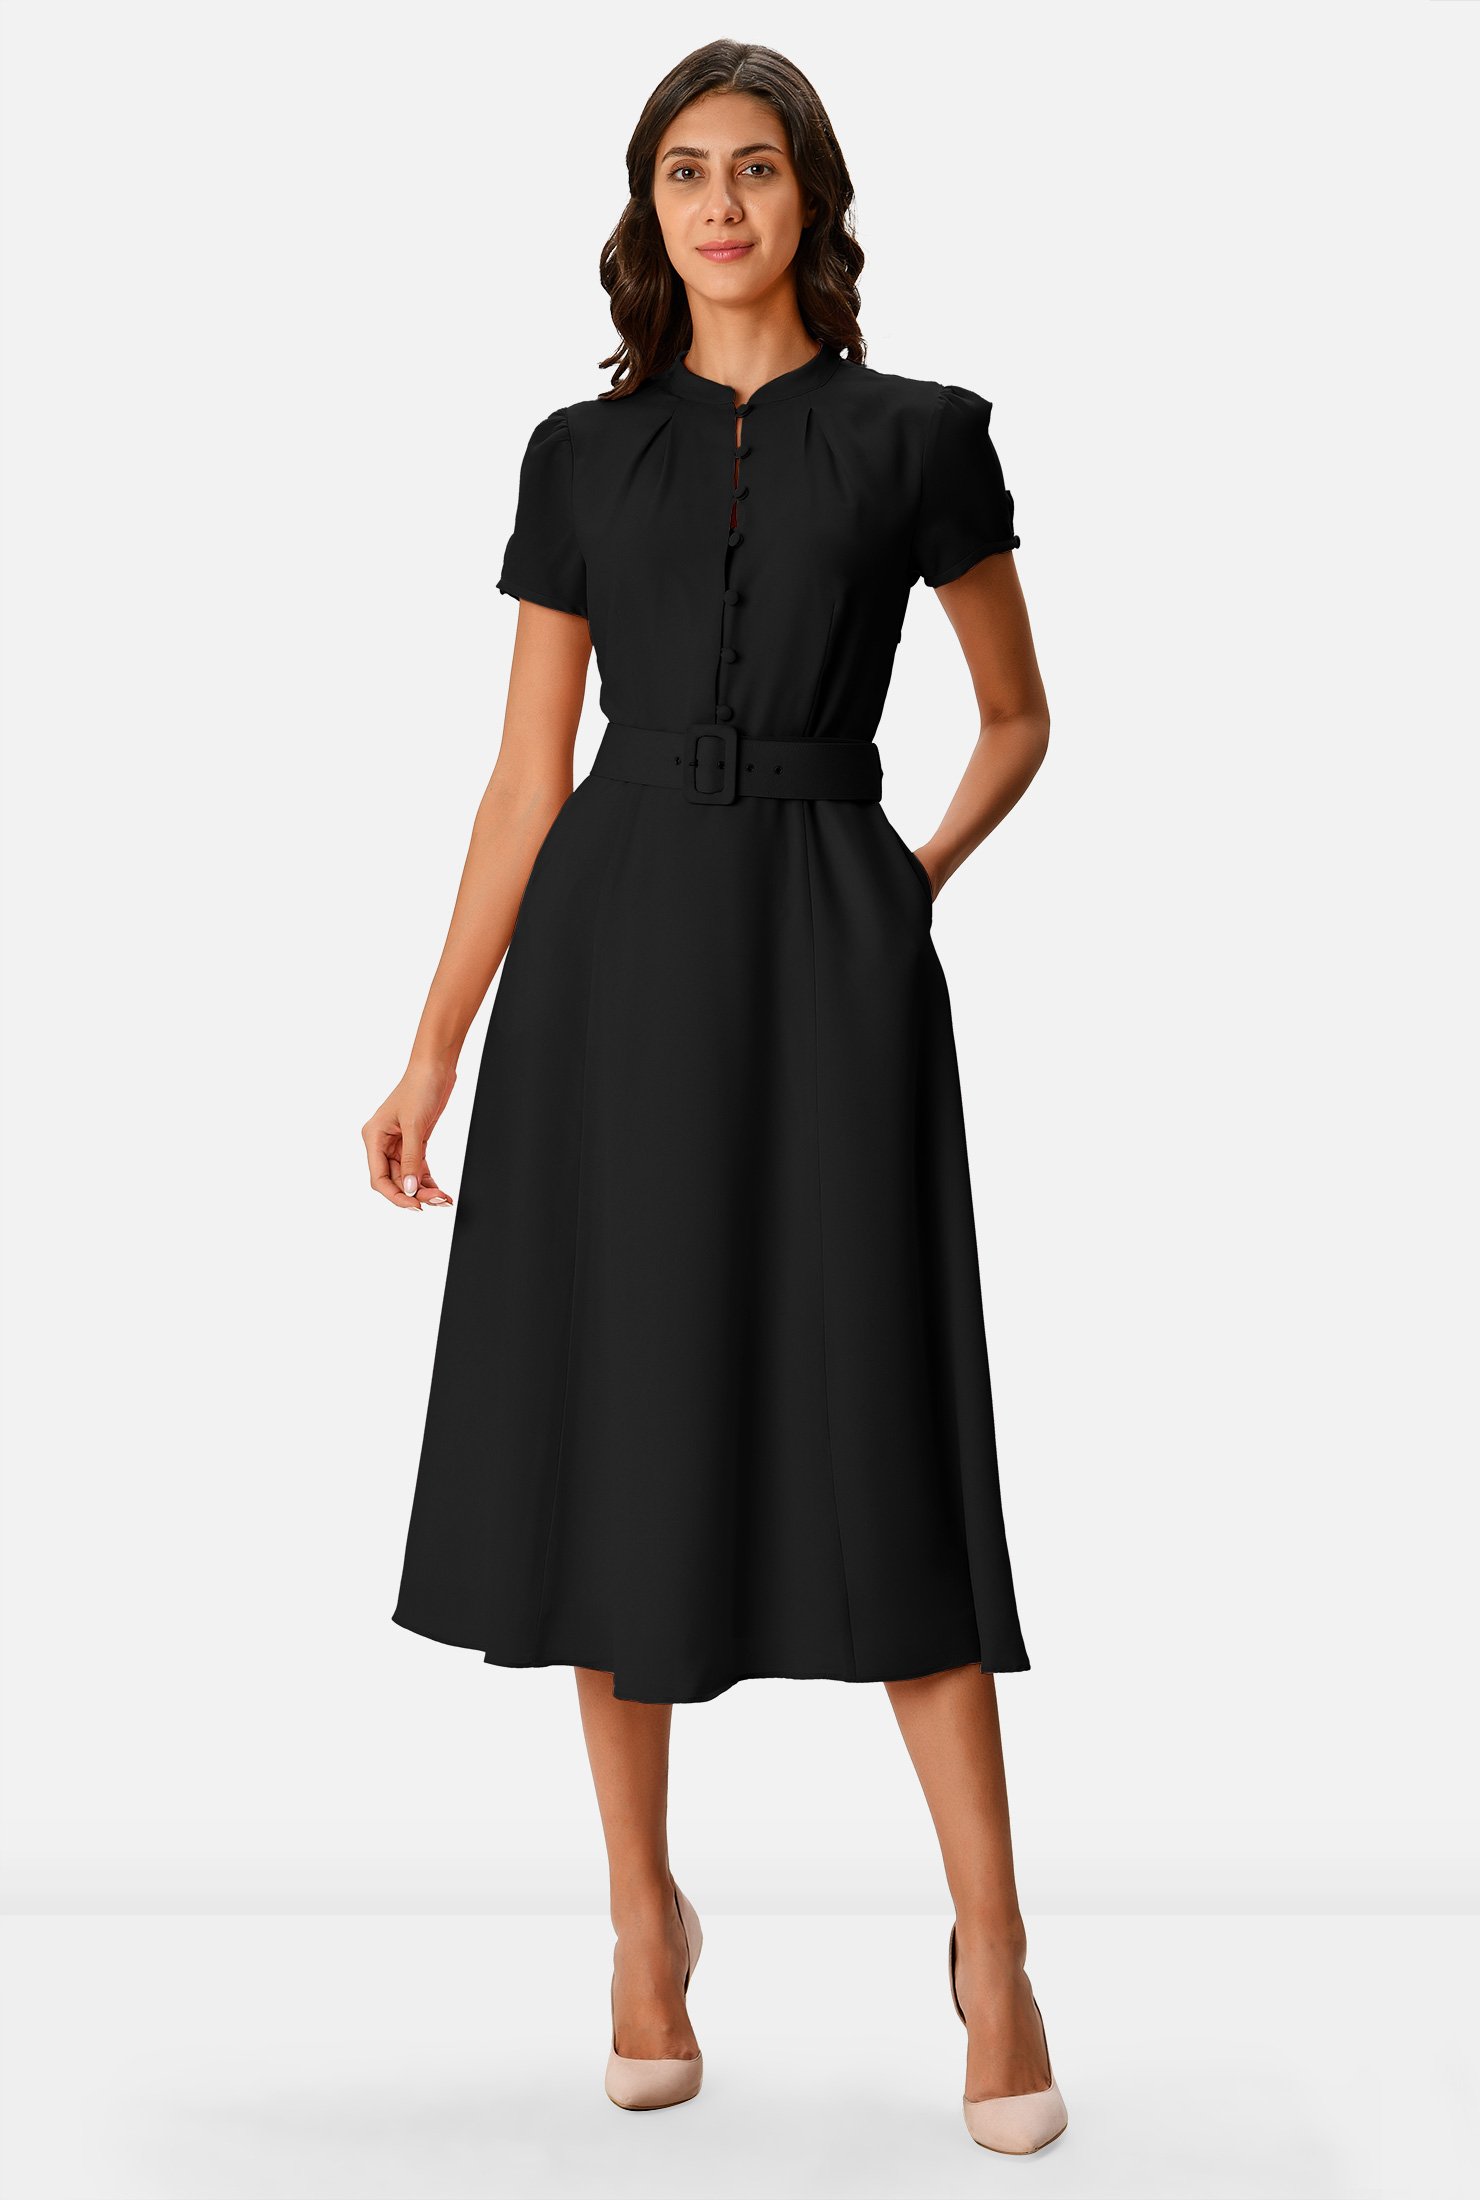 Shop Puff Sleeve Crepe Belted A-Line Dress | Eshakti